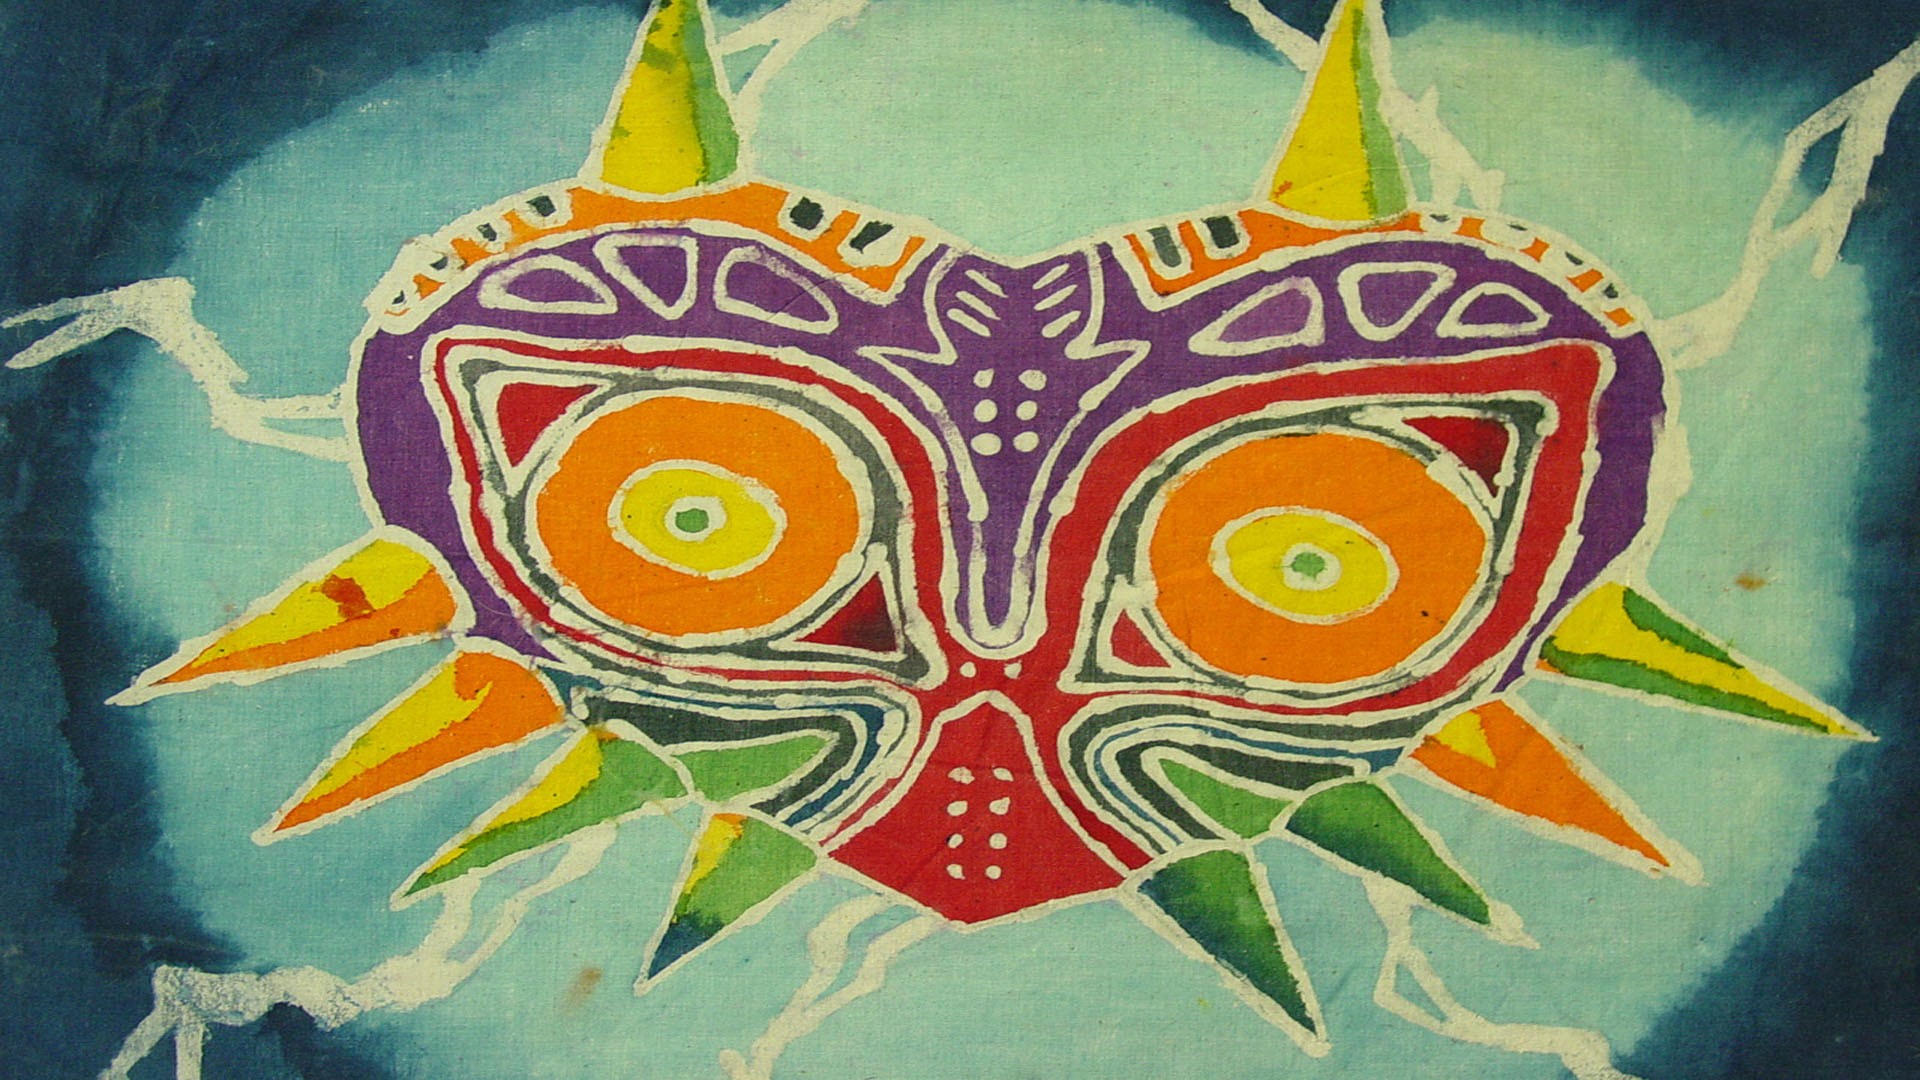 legend of zelda majoras mask art work